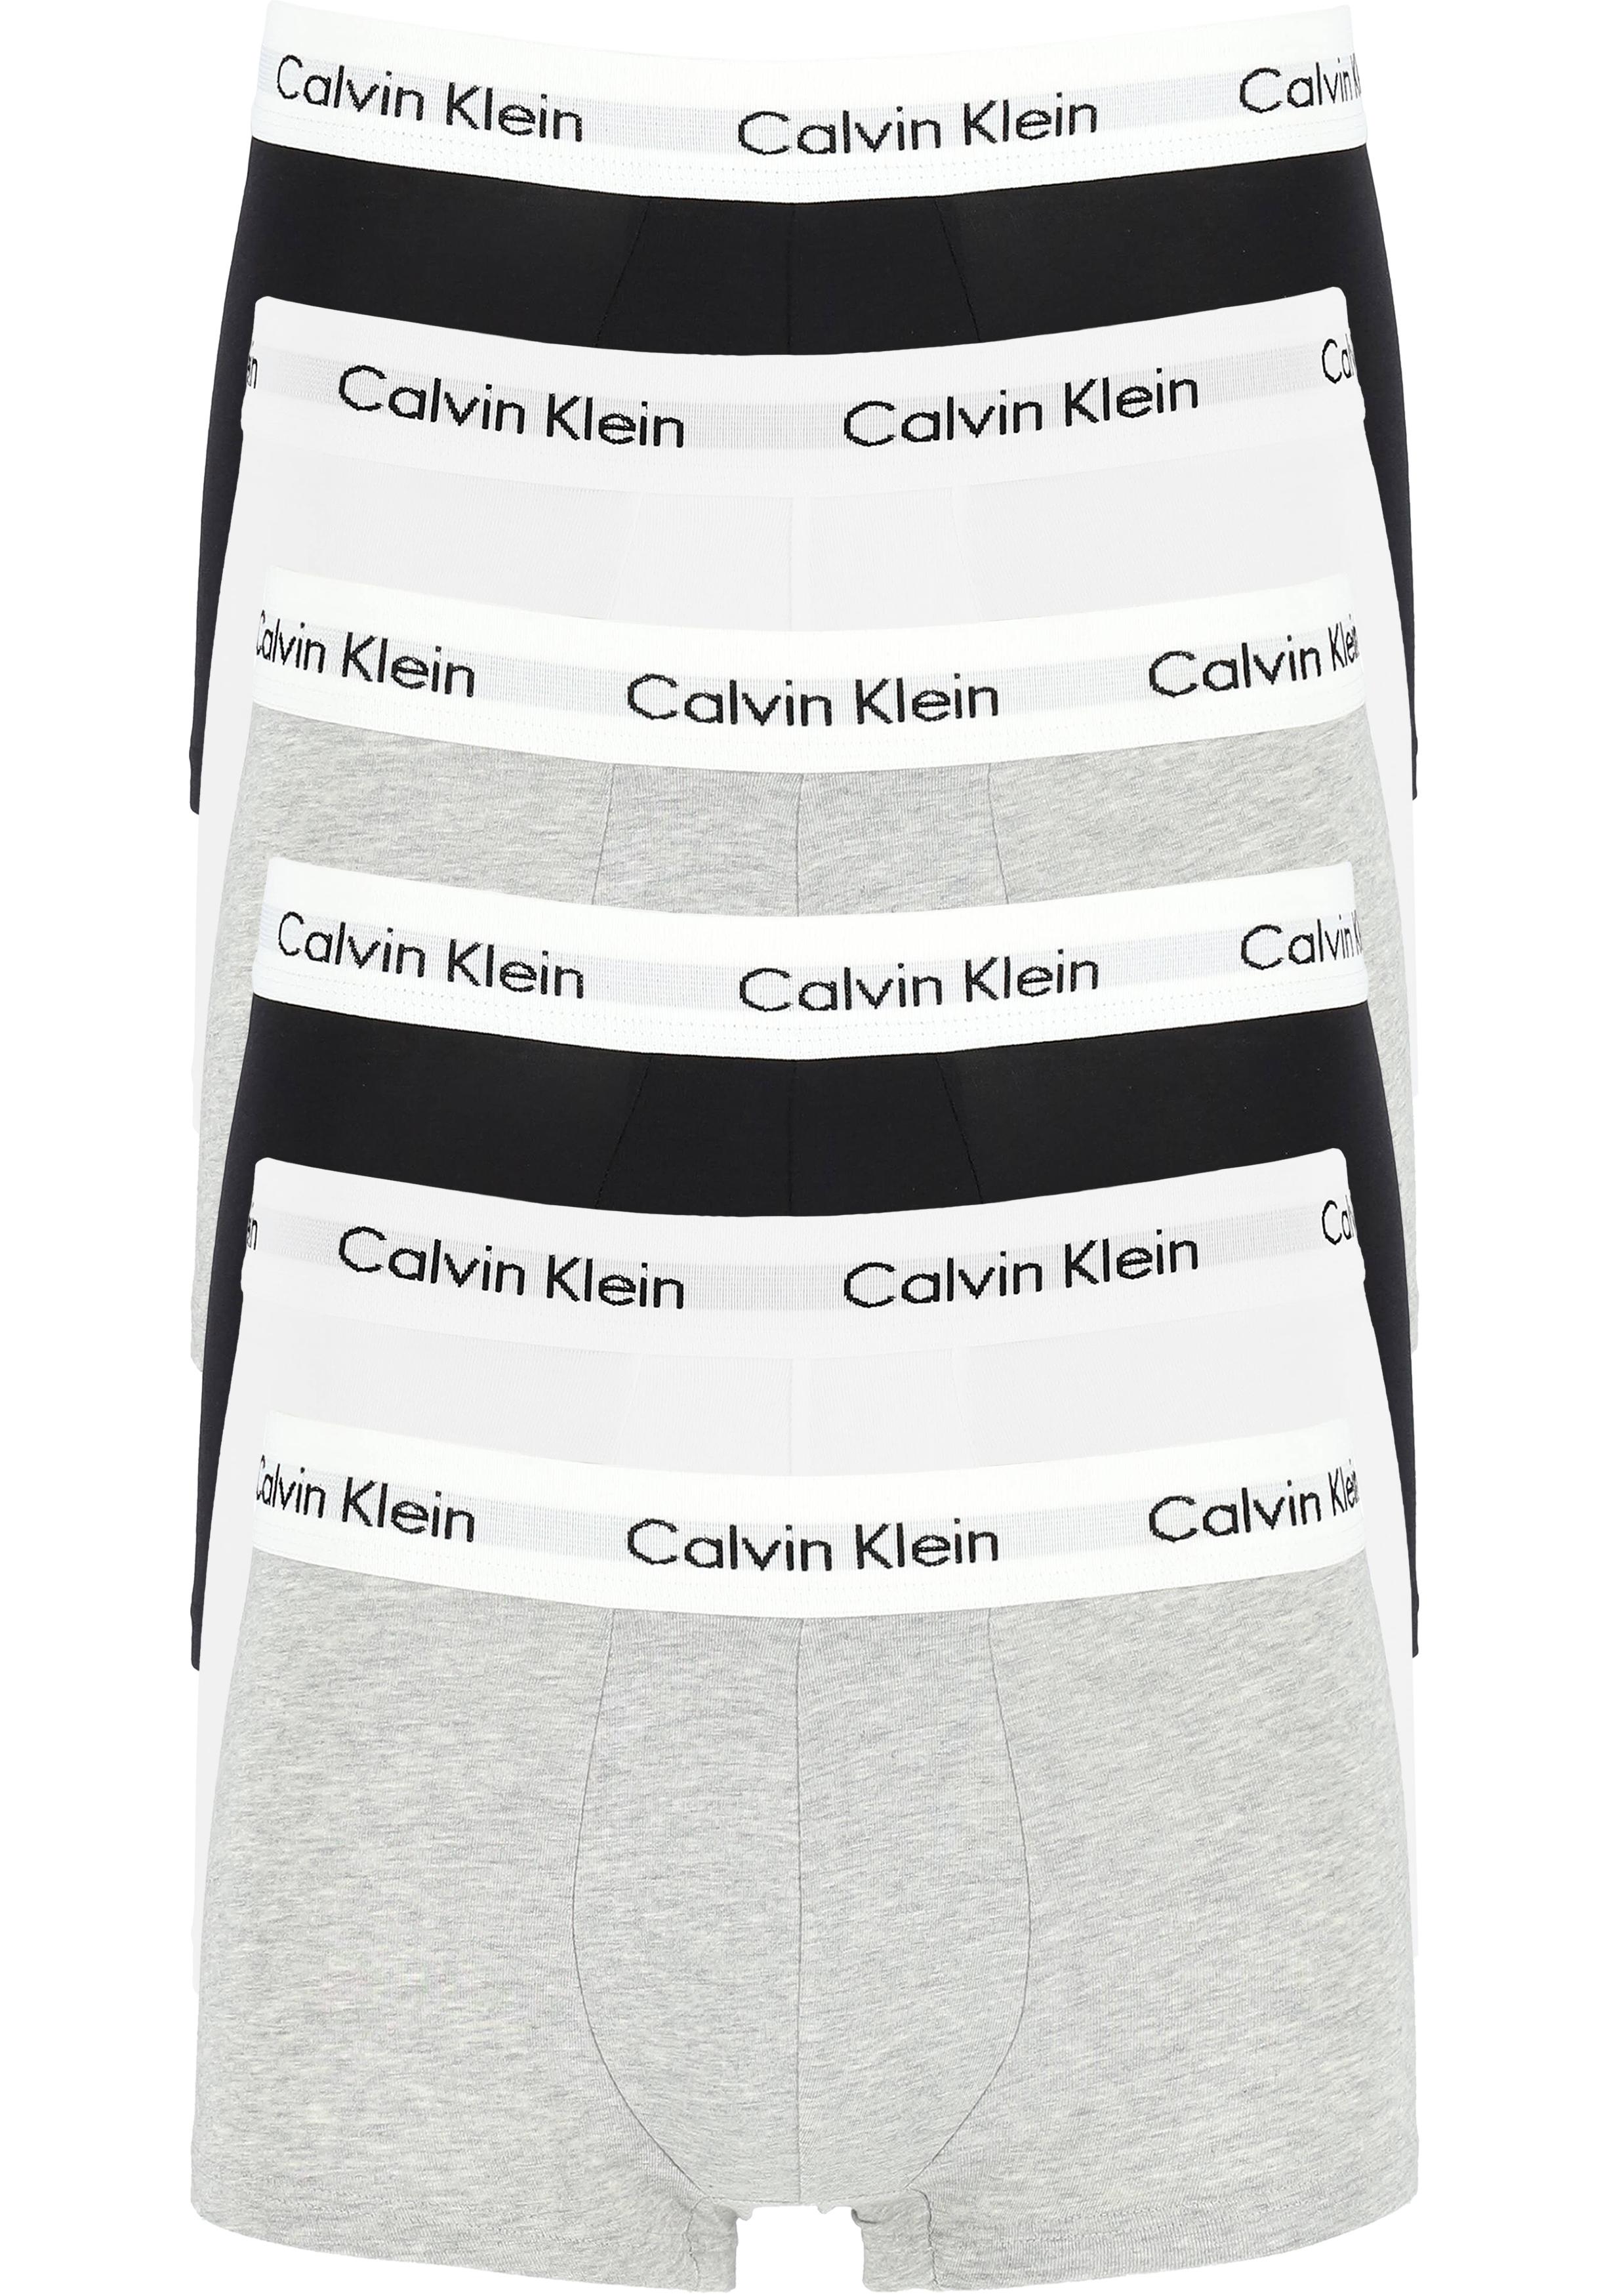 Actie 6-pack: Calvin Klein rise trunks, lage heren boxers kort,... - Zomer SALE tot 70% korting